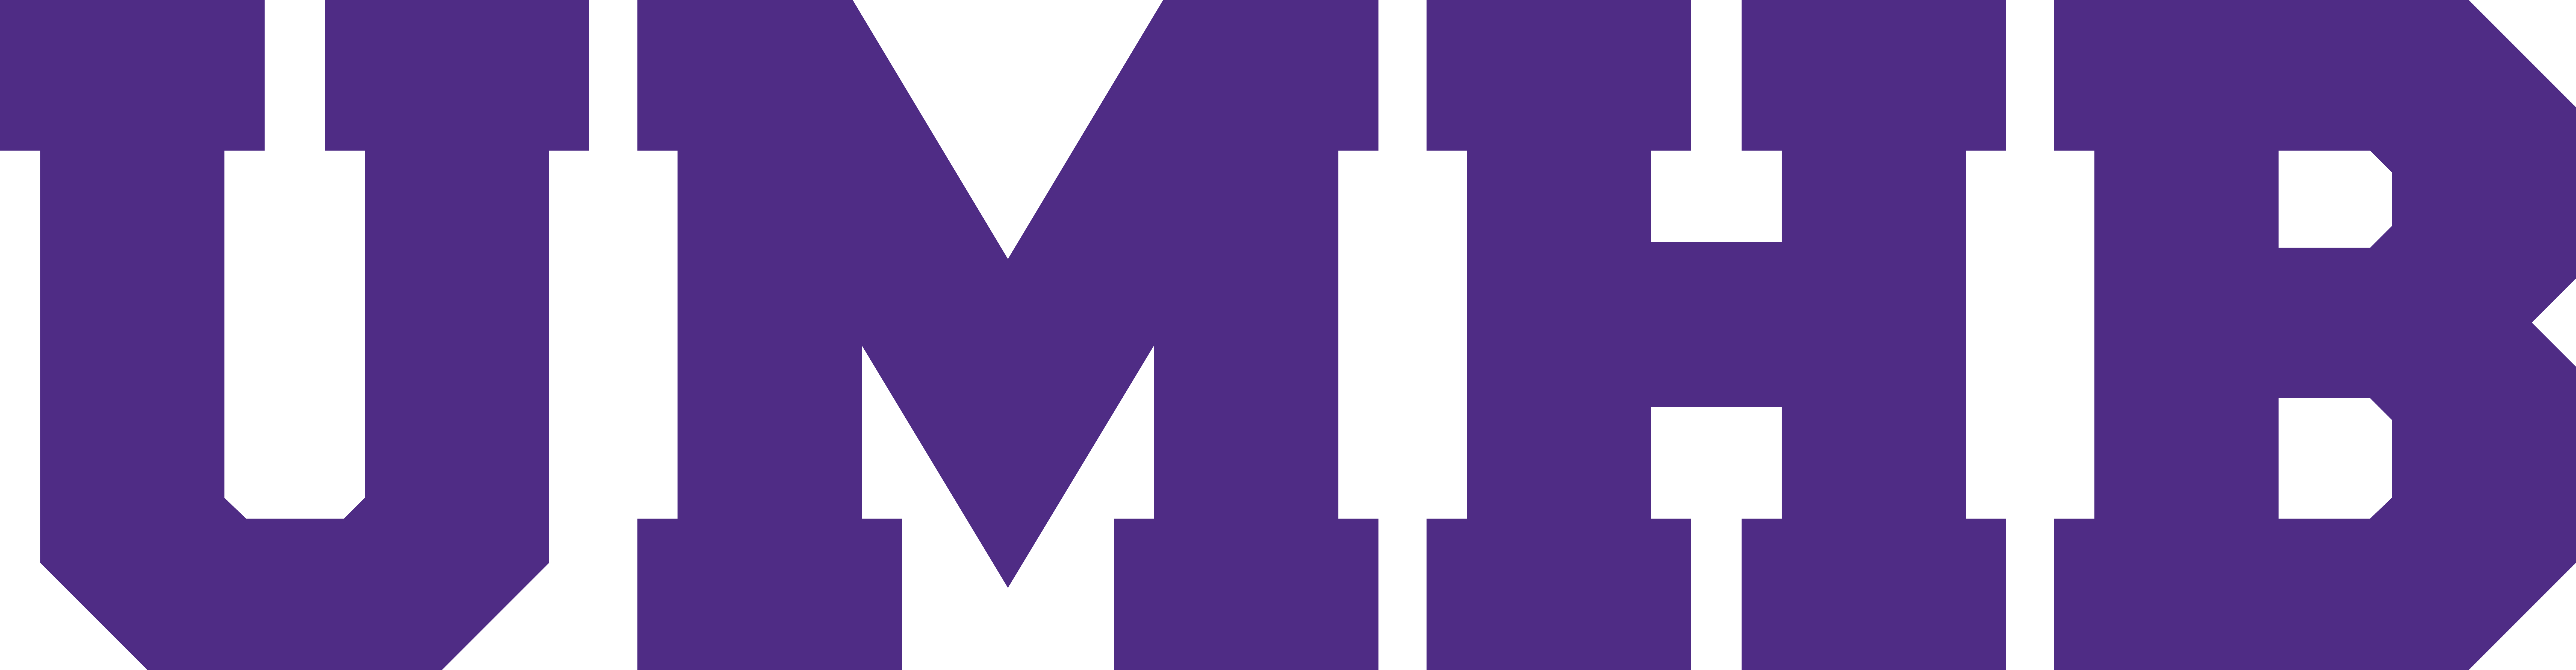  UMHB purple secondary corporate logo